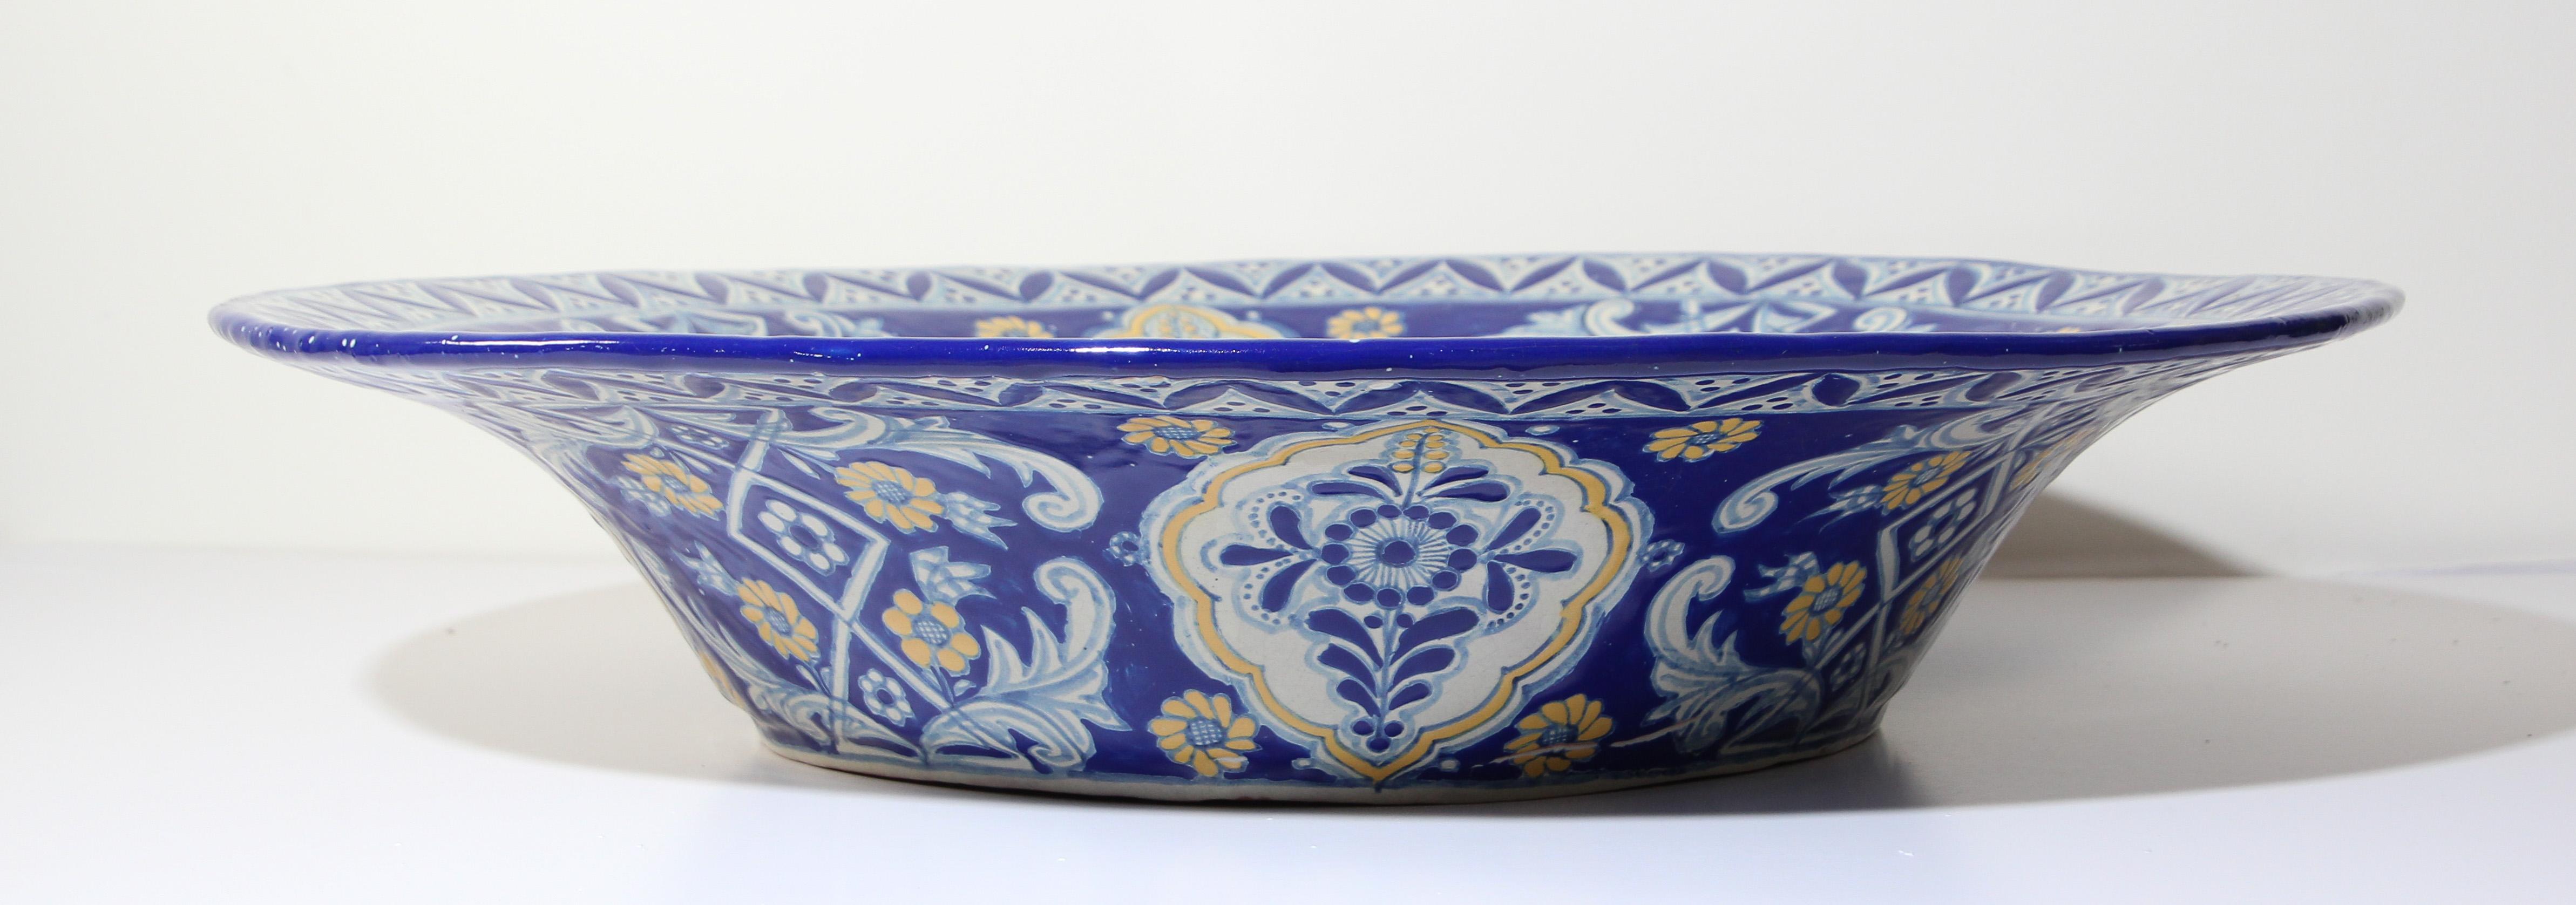 Oversized Blue and White Mexican Talavera Glazed Ceramic Bowl 1